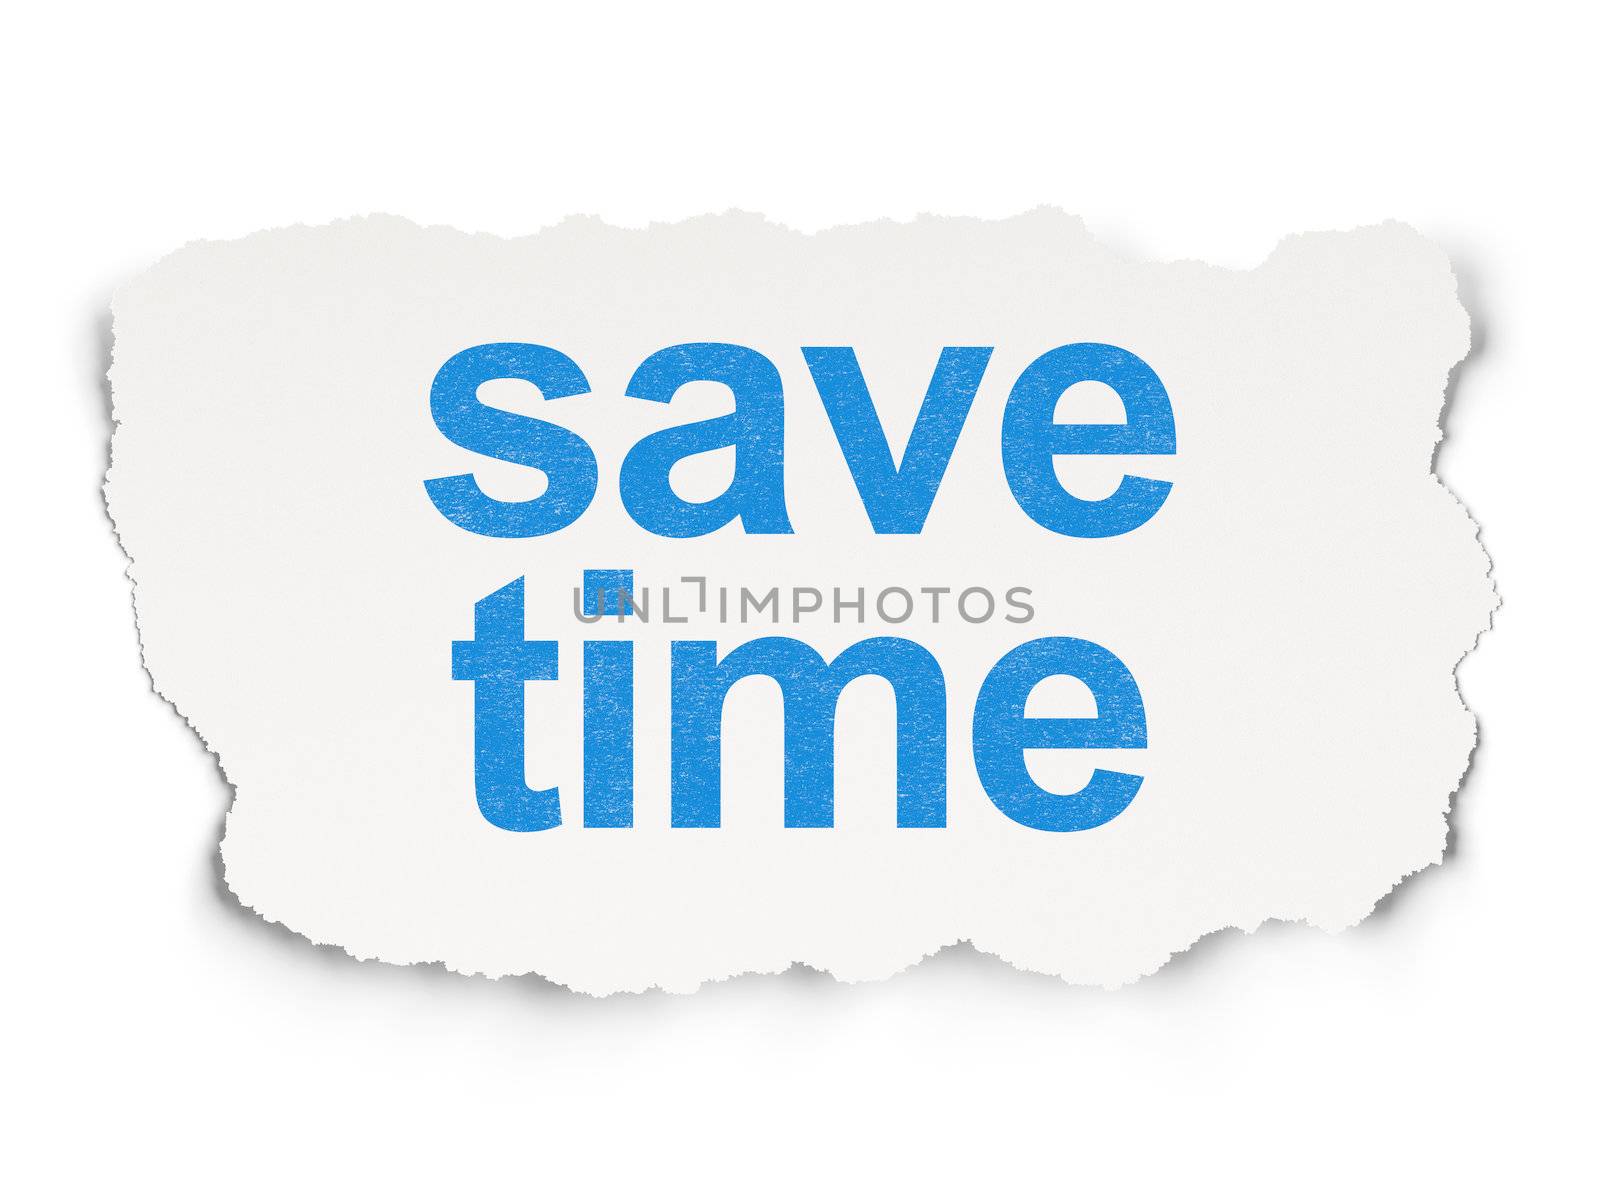 Timeline concept: Save Time by maxkabakov